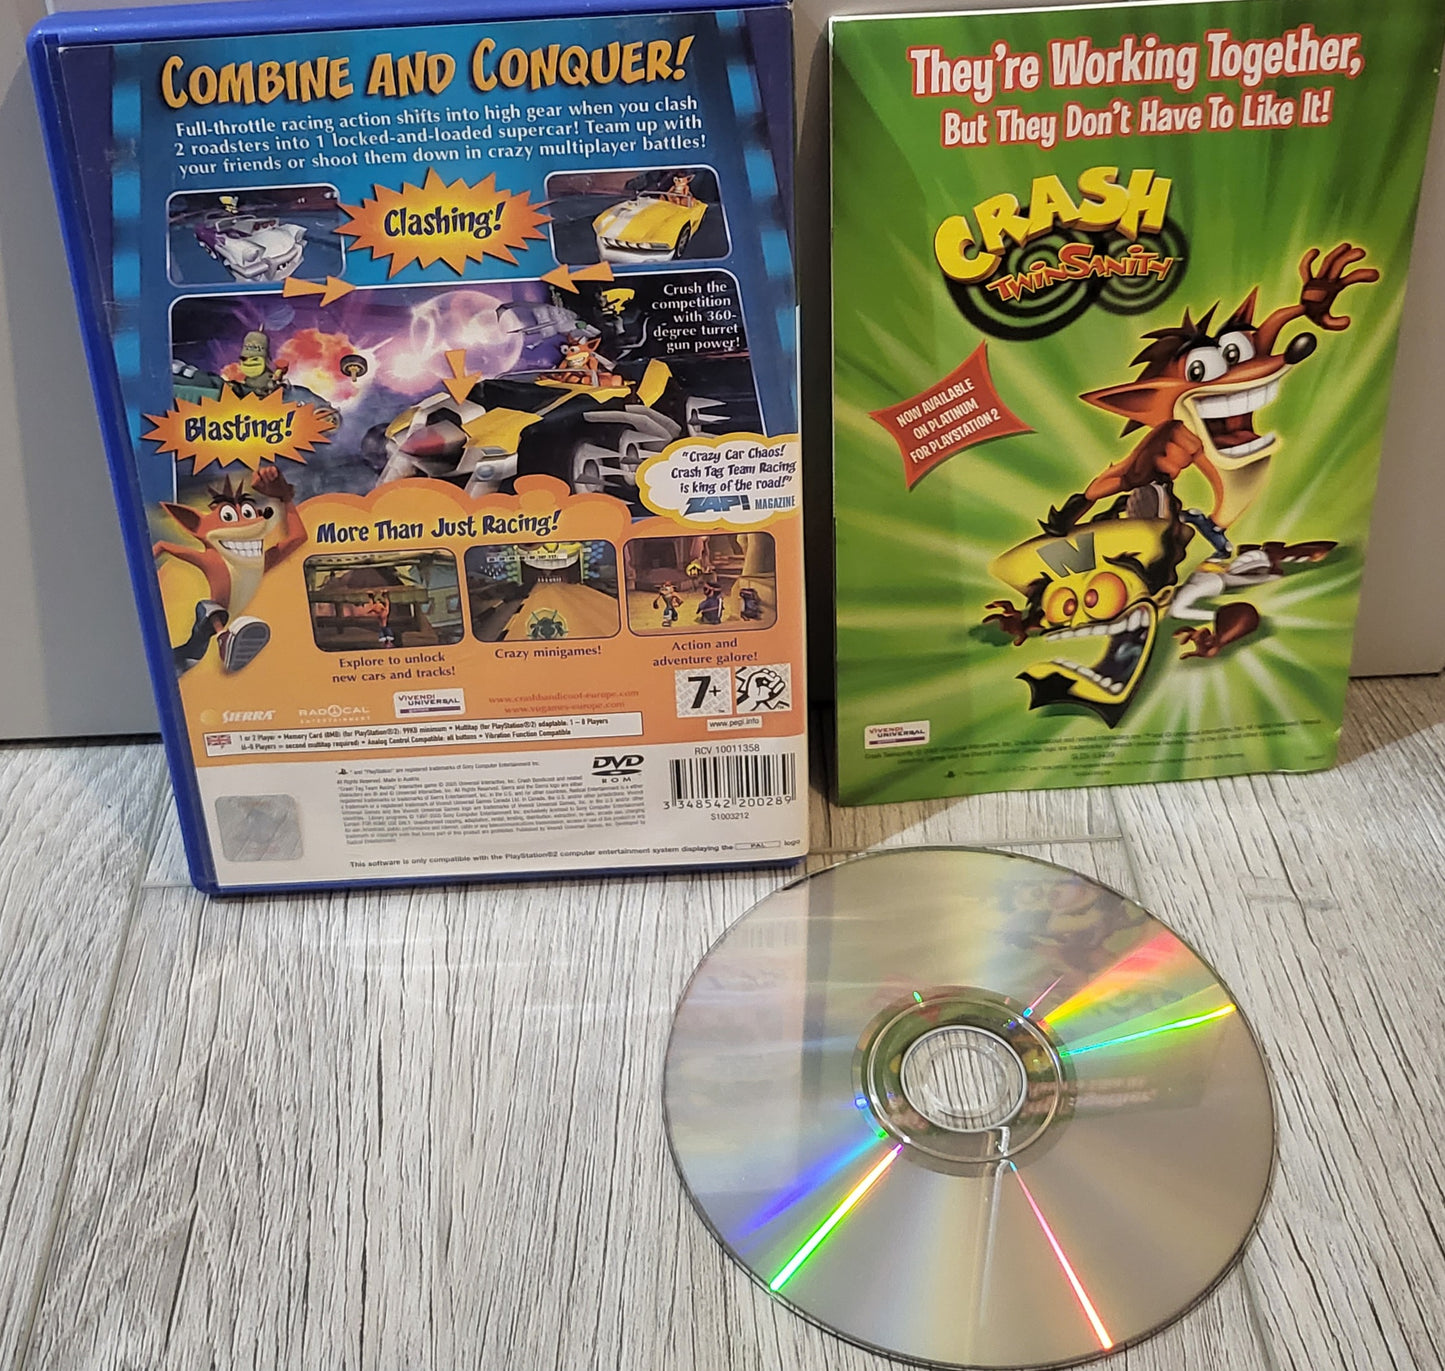 Crash Tag Team Racing Sony Playstation 2 (PS2) Game